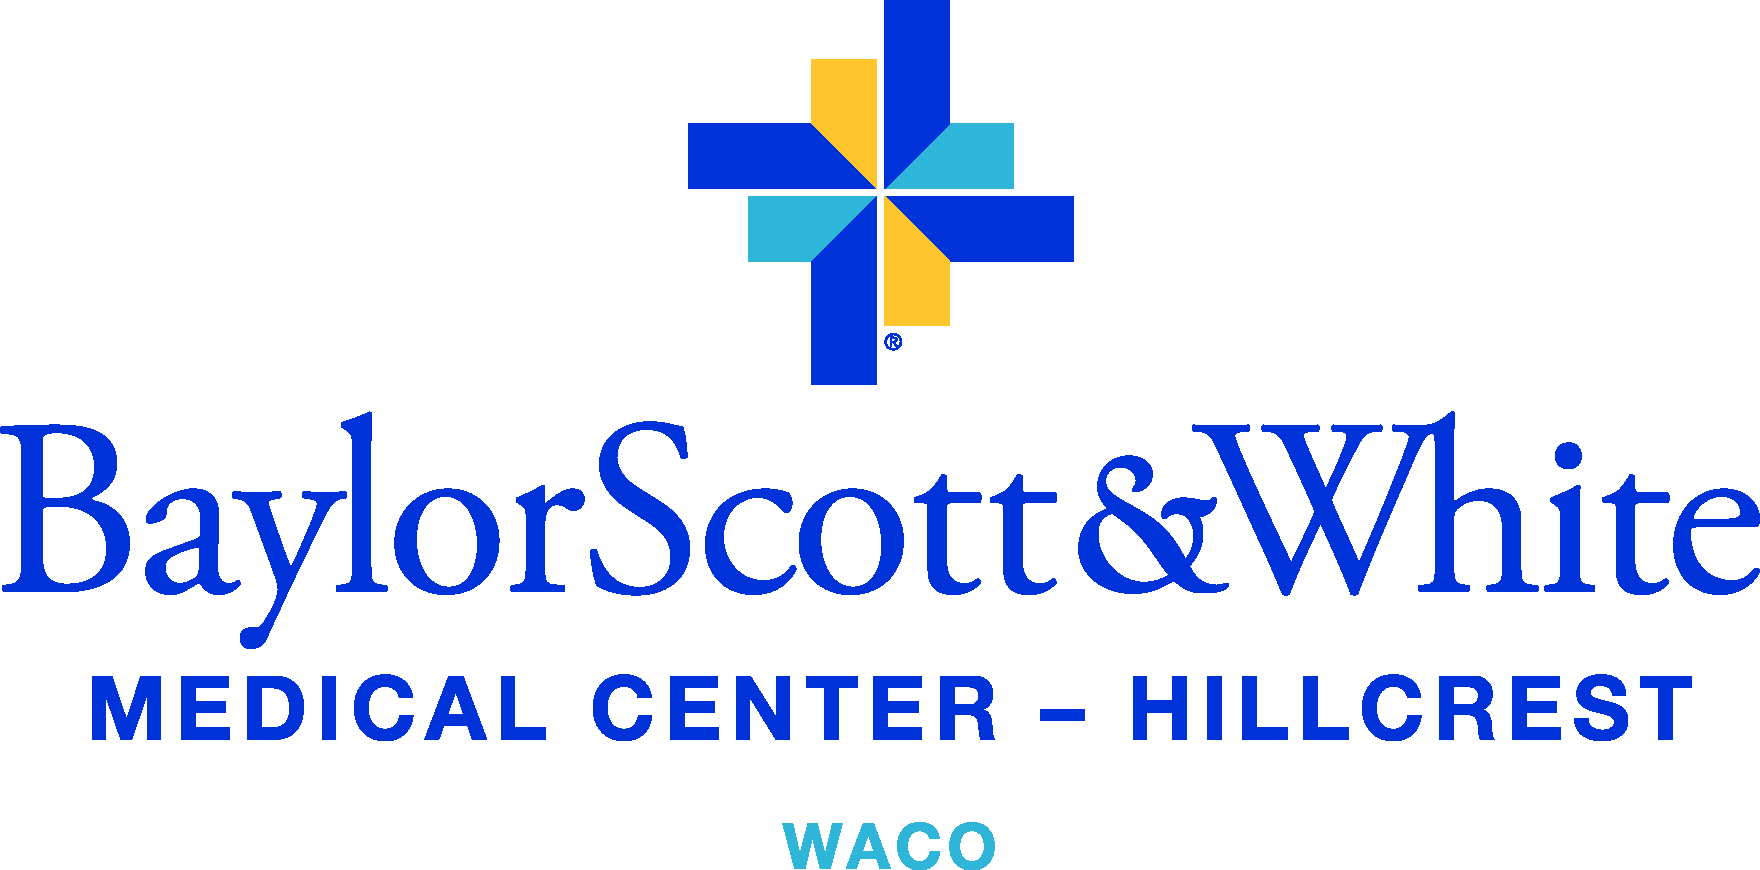 Baylor Scott & White sponsorship logo